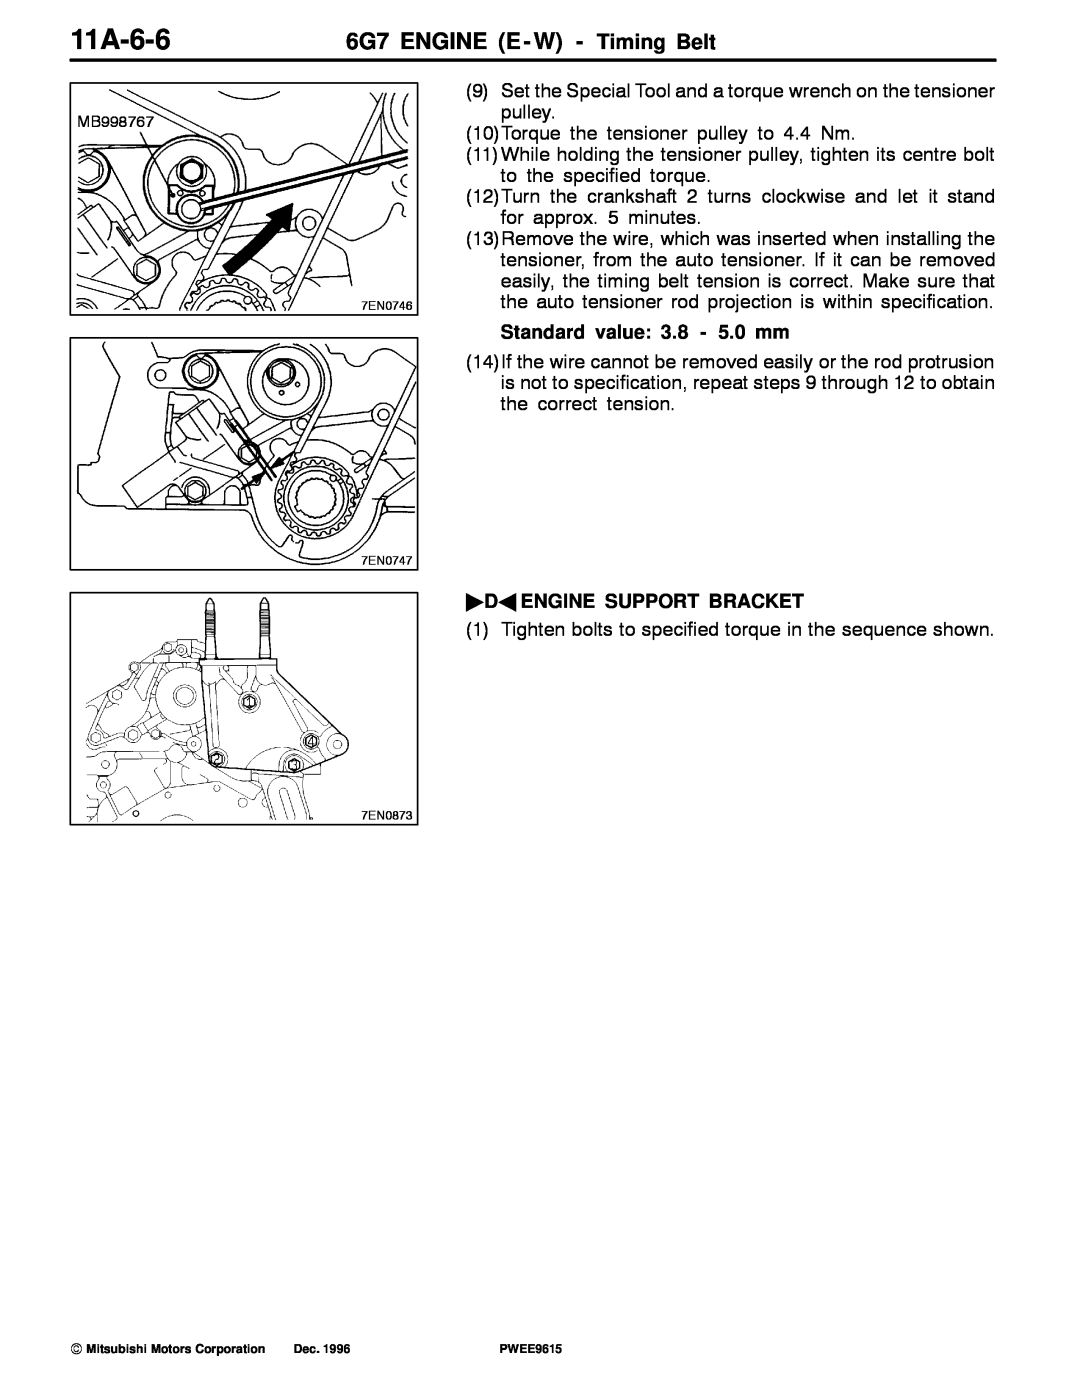 Mitsubishi 11A-6-6, Standard value 3.8 - 5.0 mm, Da Engine Support Bracket, 6G7 ENGINE E - W - Timing Belt 